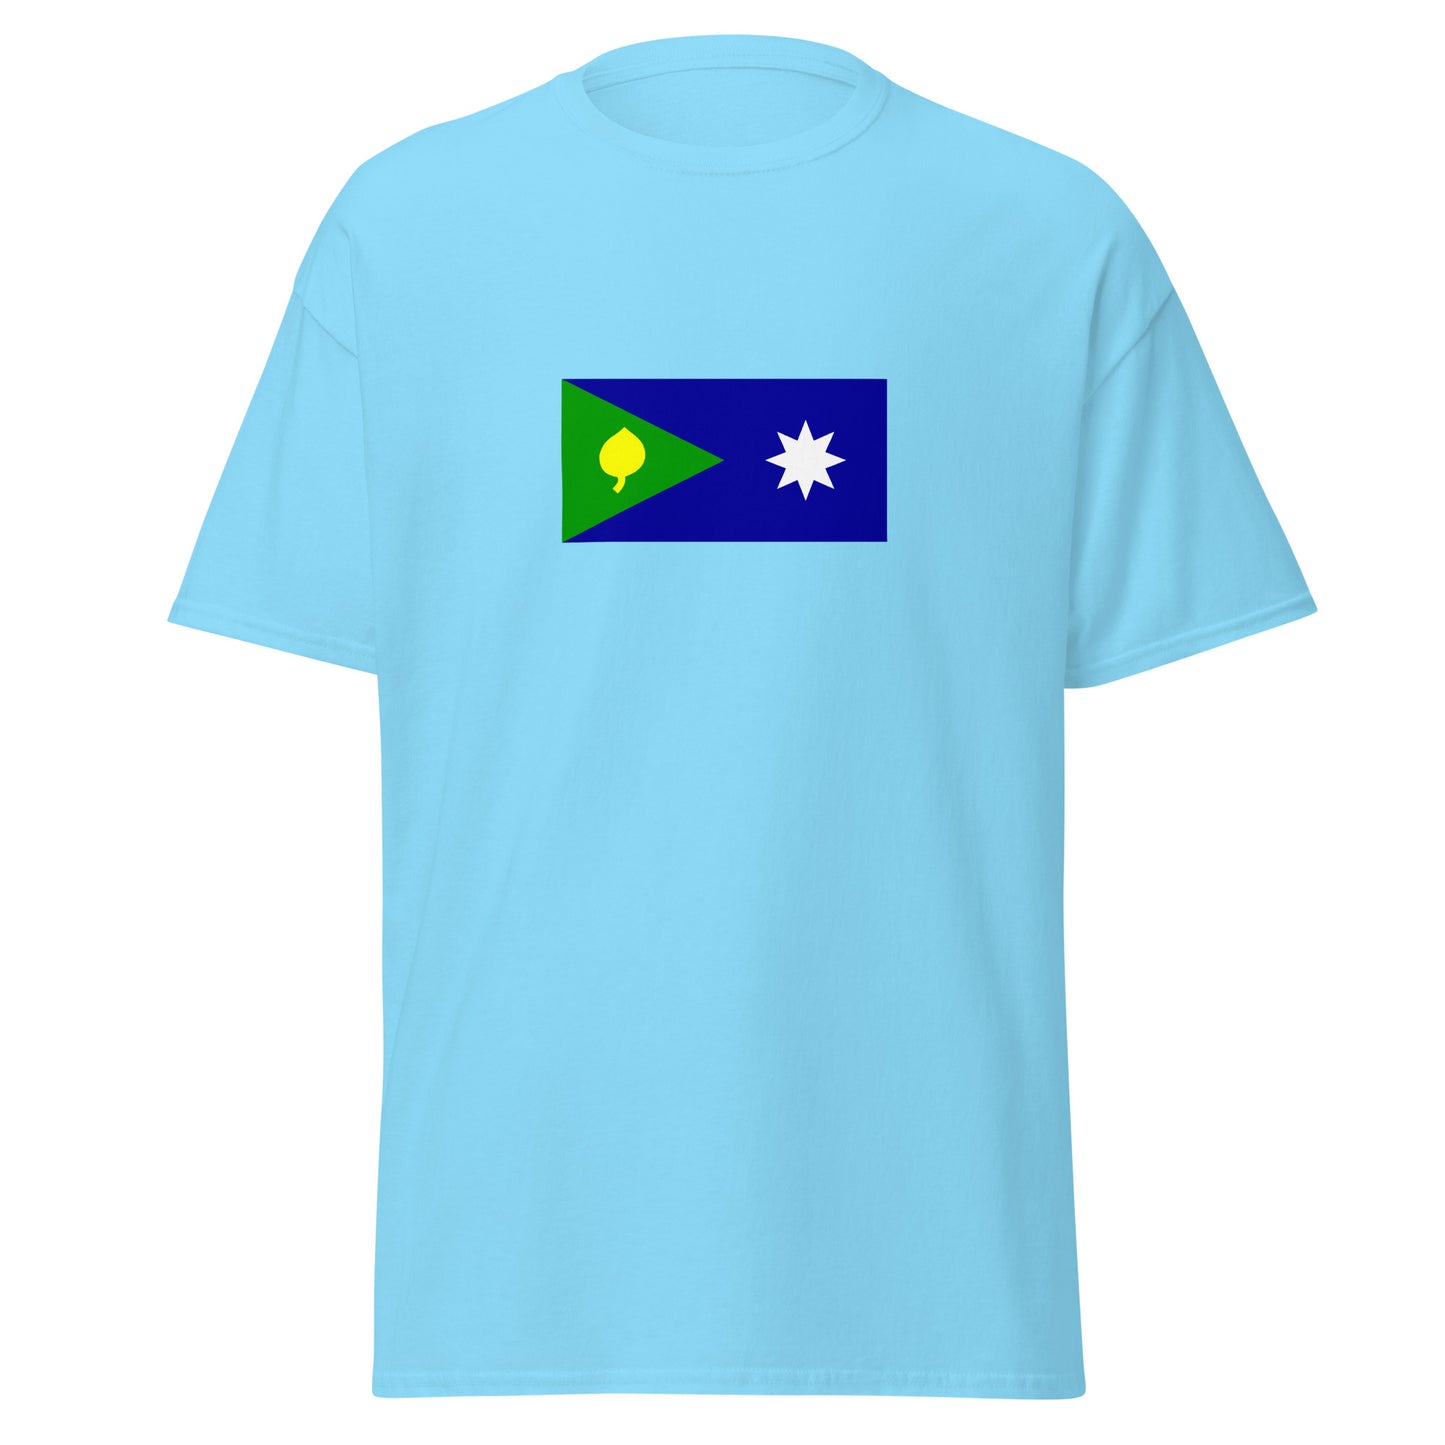 Australia - Saibai Island people | Aboriginal Australian Flag Interactive T-shirt